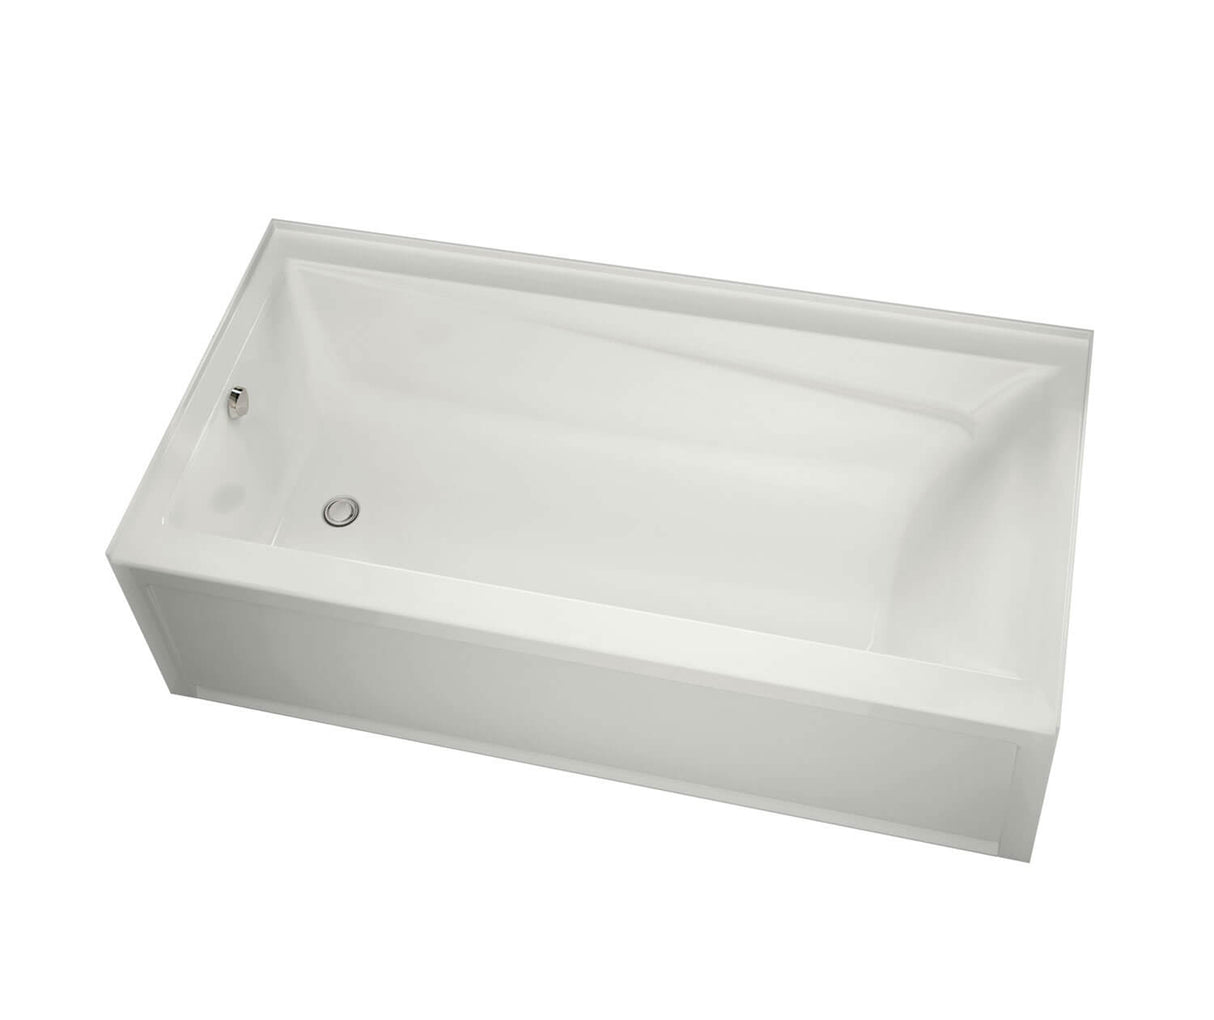 MAAX 106222-L-097-001 Exhibit 6632 IFS AFR Acrylic Alcove Left-Hand Drain Combined Whirlpool & Aeroeffect Bathtub in White